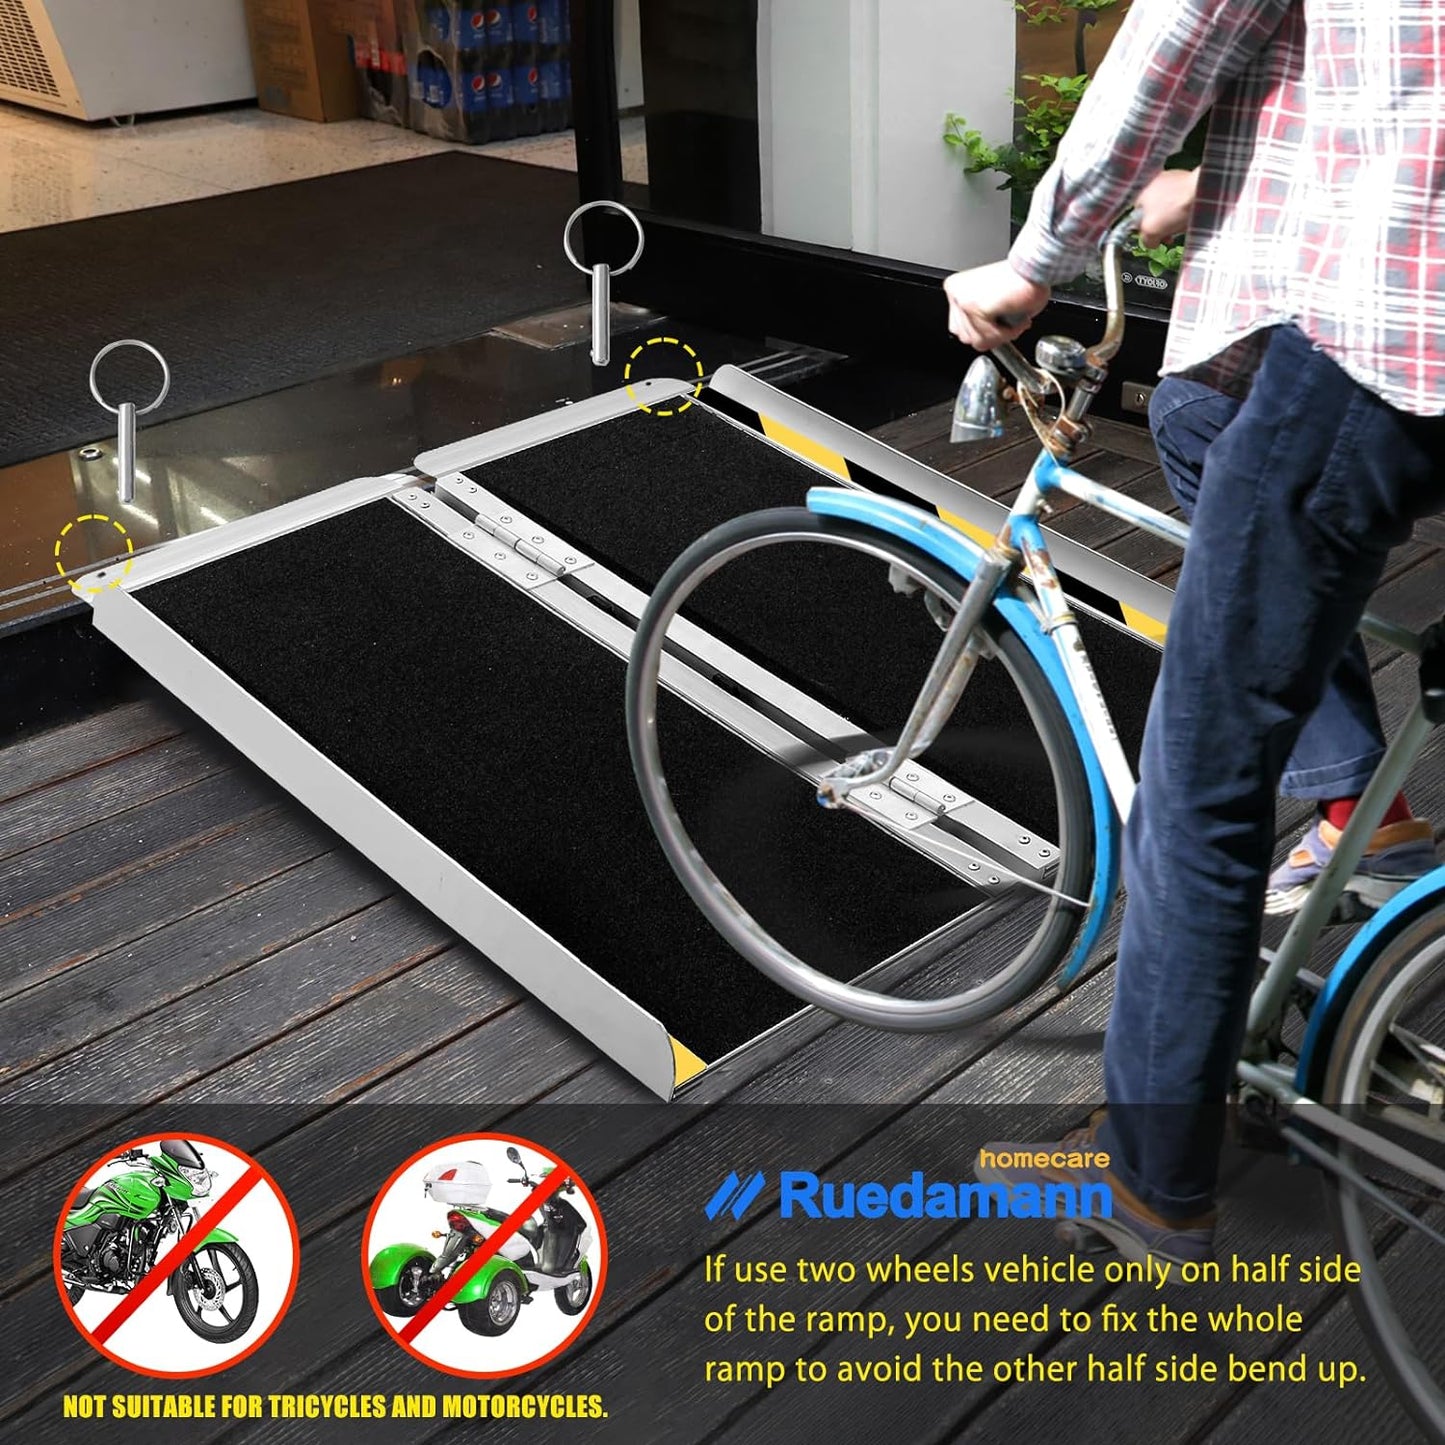 Ruedamann® Foldable Aluminum Wheelchair Ramp with Non-Slip Surface